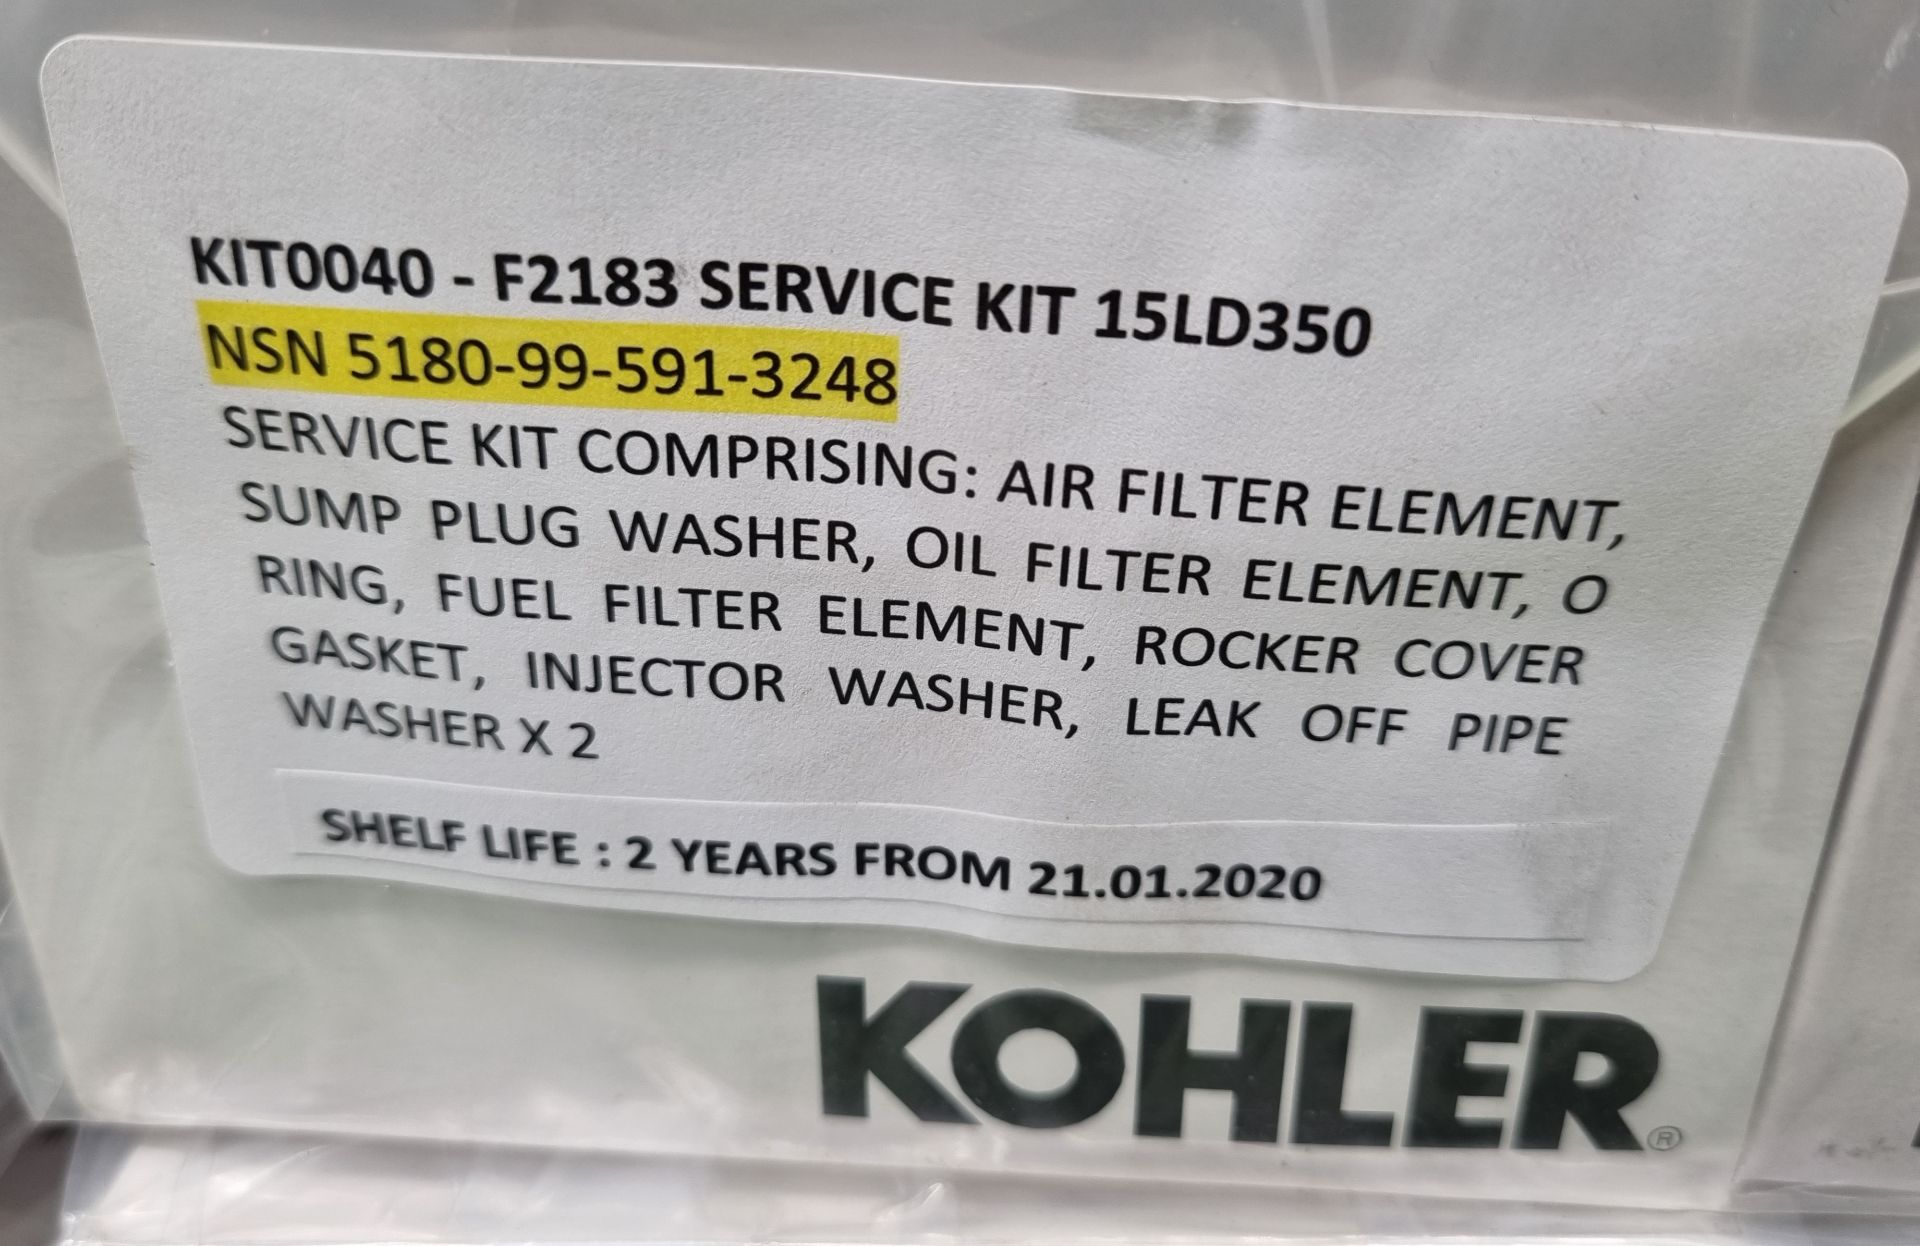 25x Kohler service kits - air filter element, sump plug washer, oil filter element, O ring - Image 2 of 6